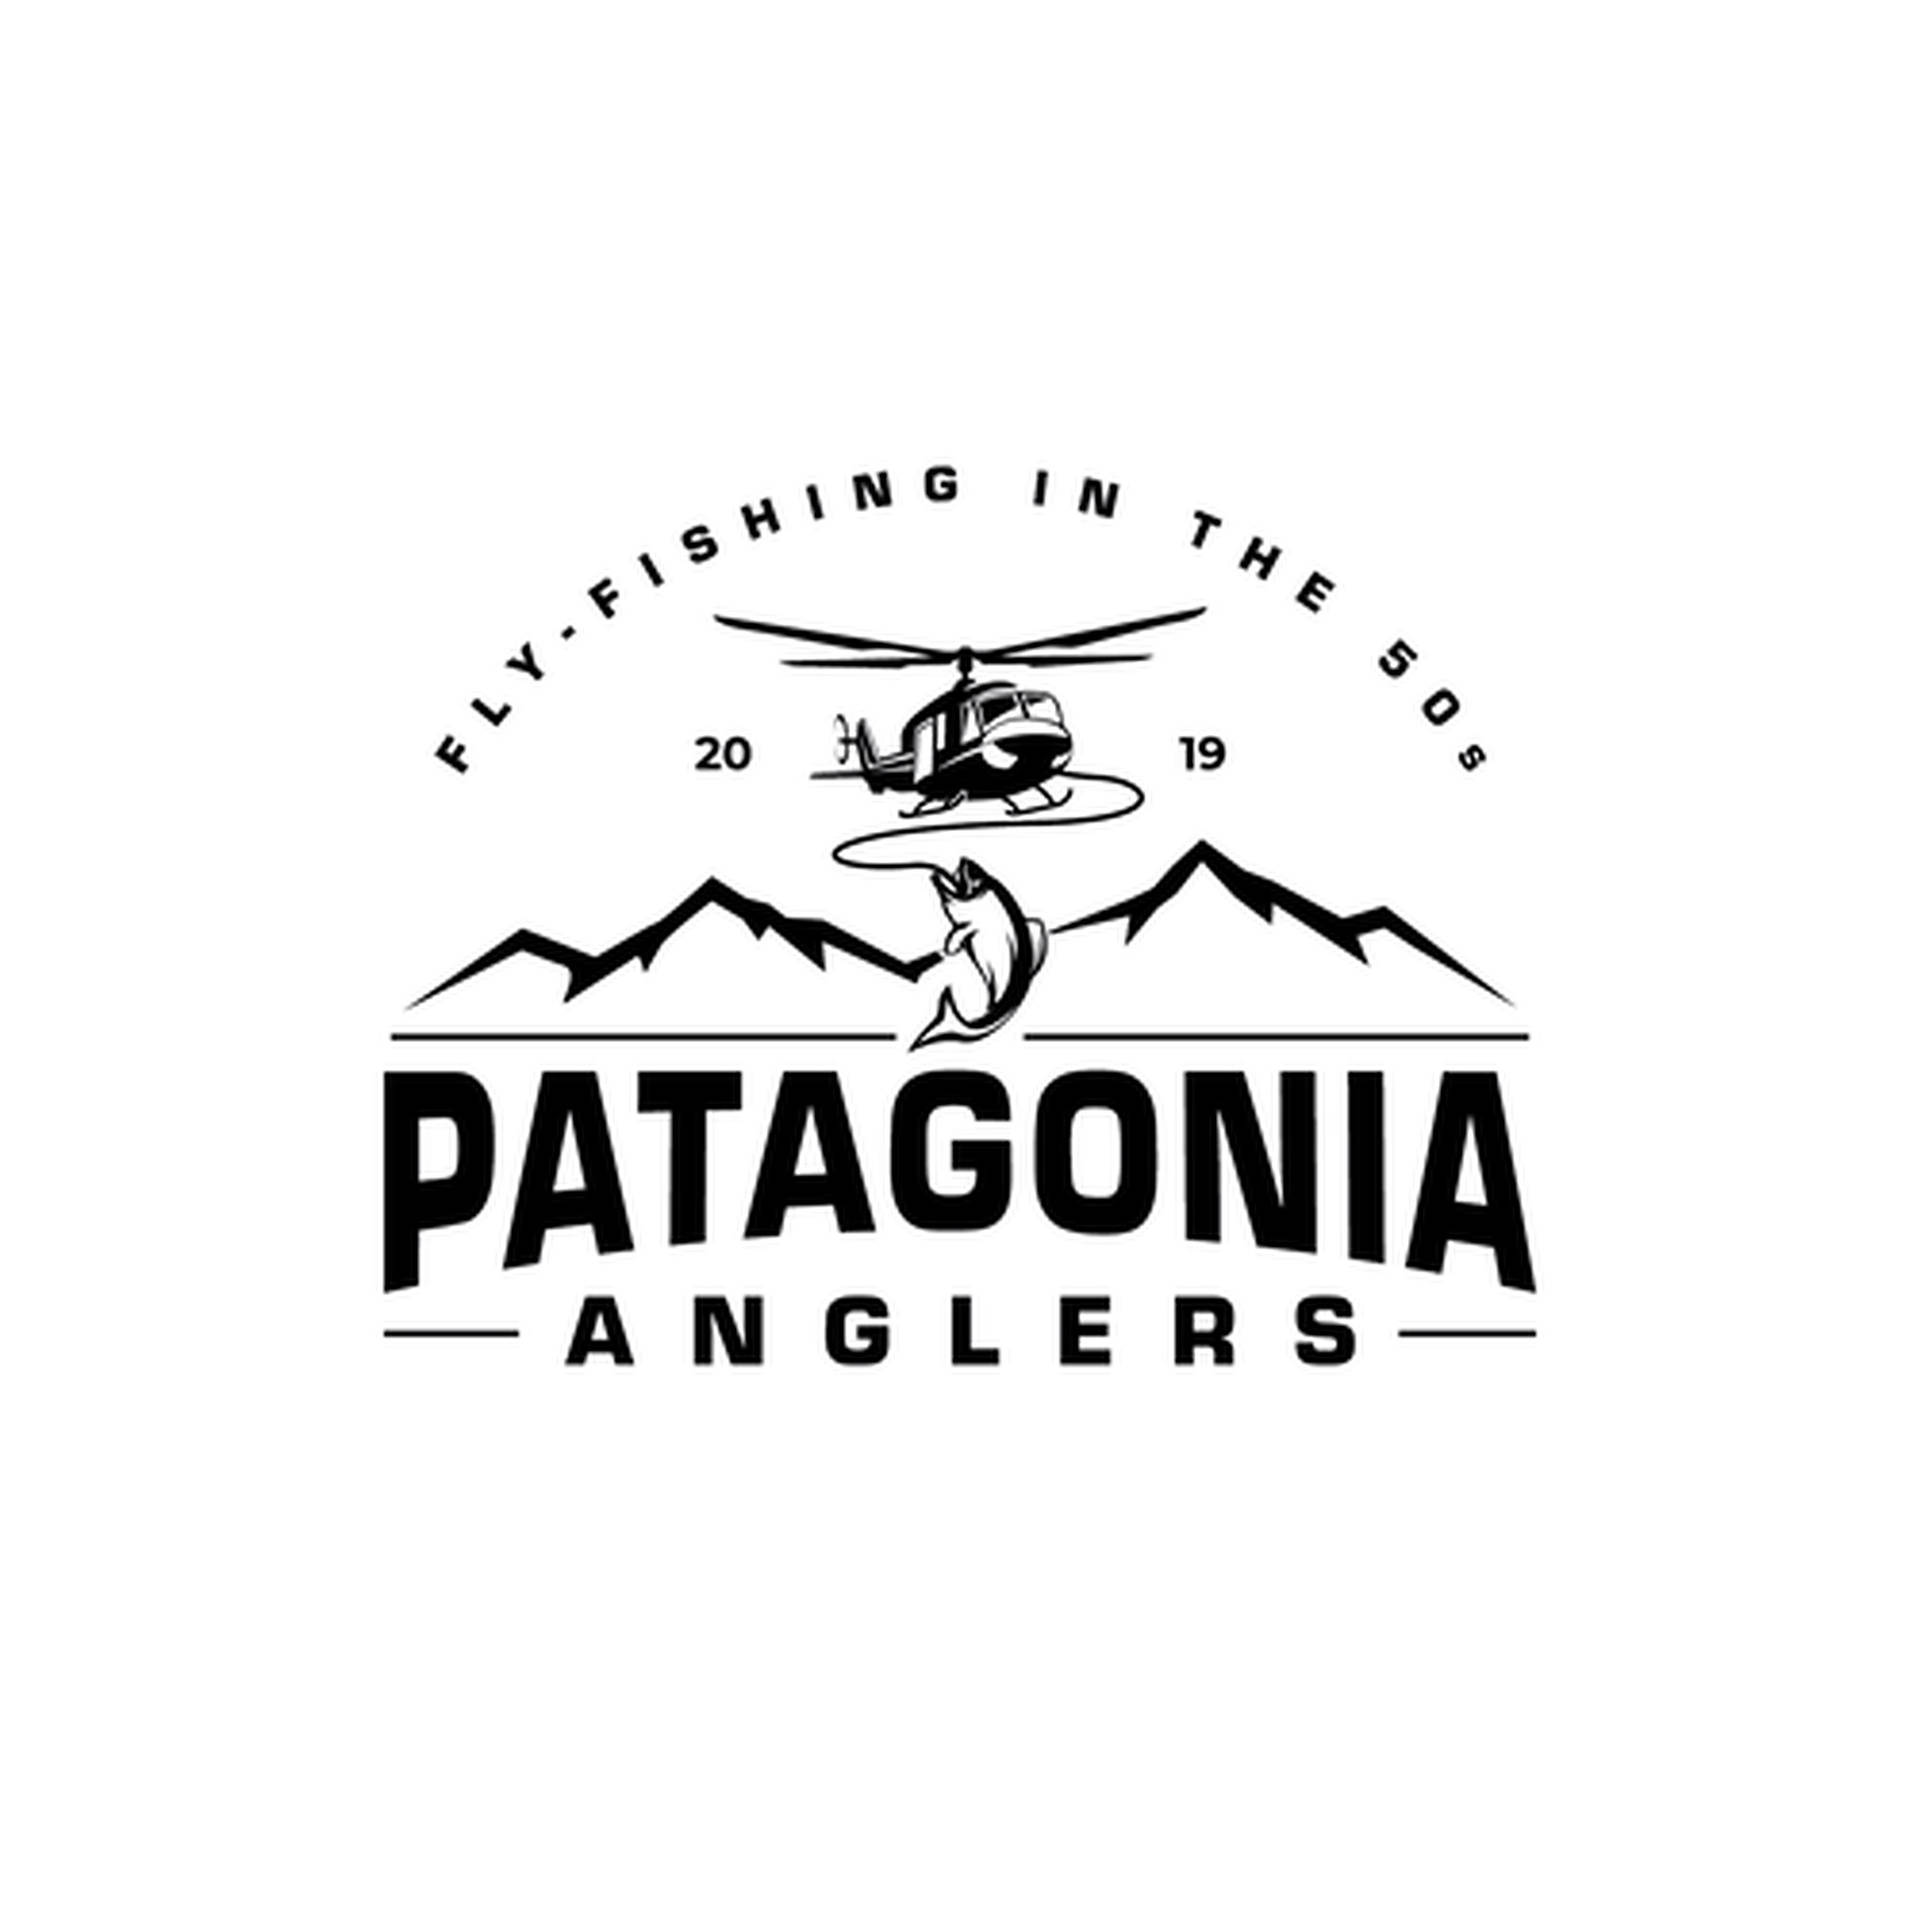 Patagonia Anglers Logo Wallpaper